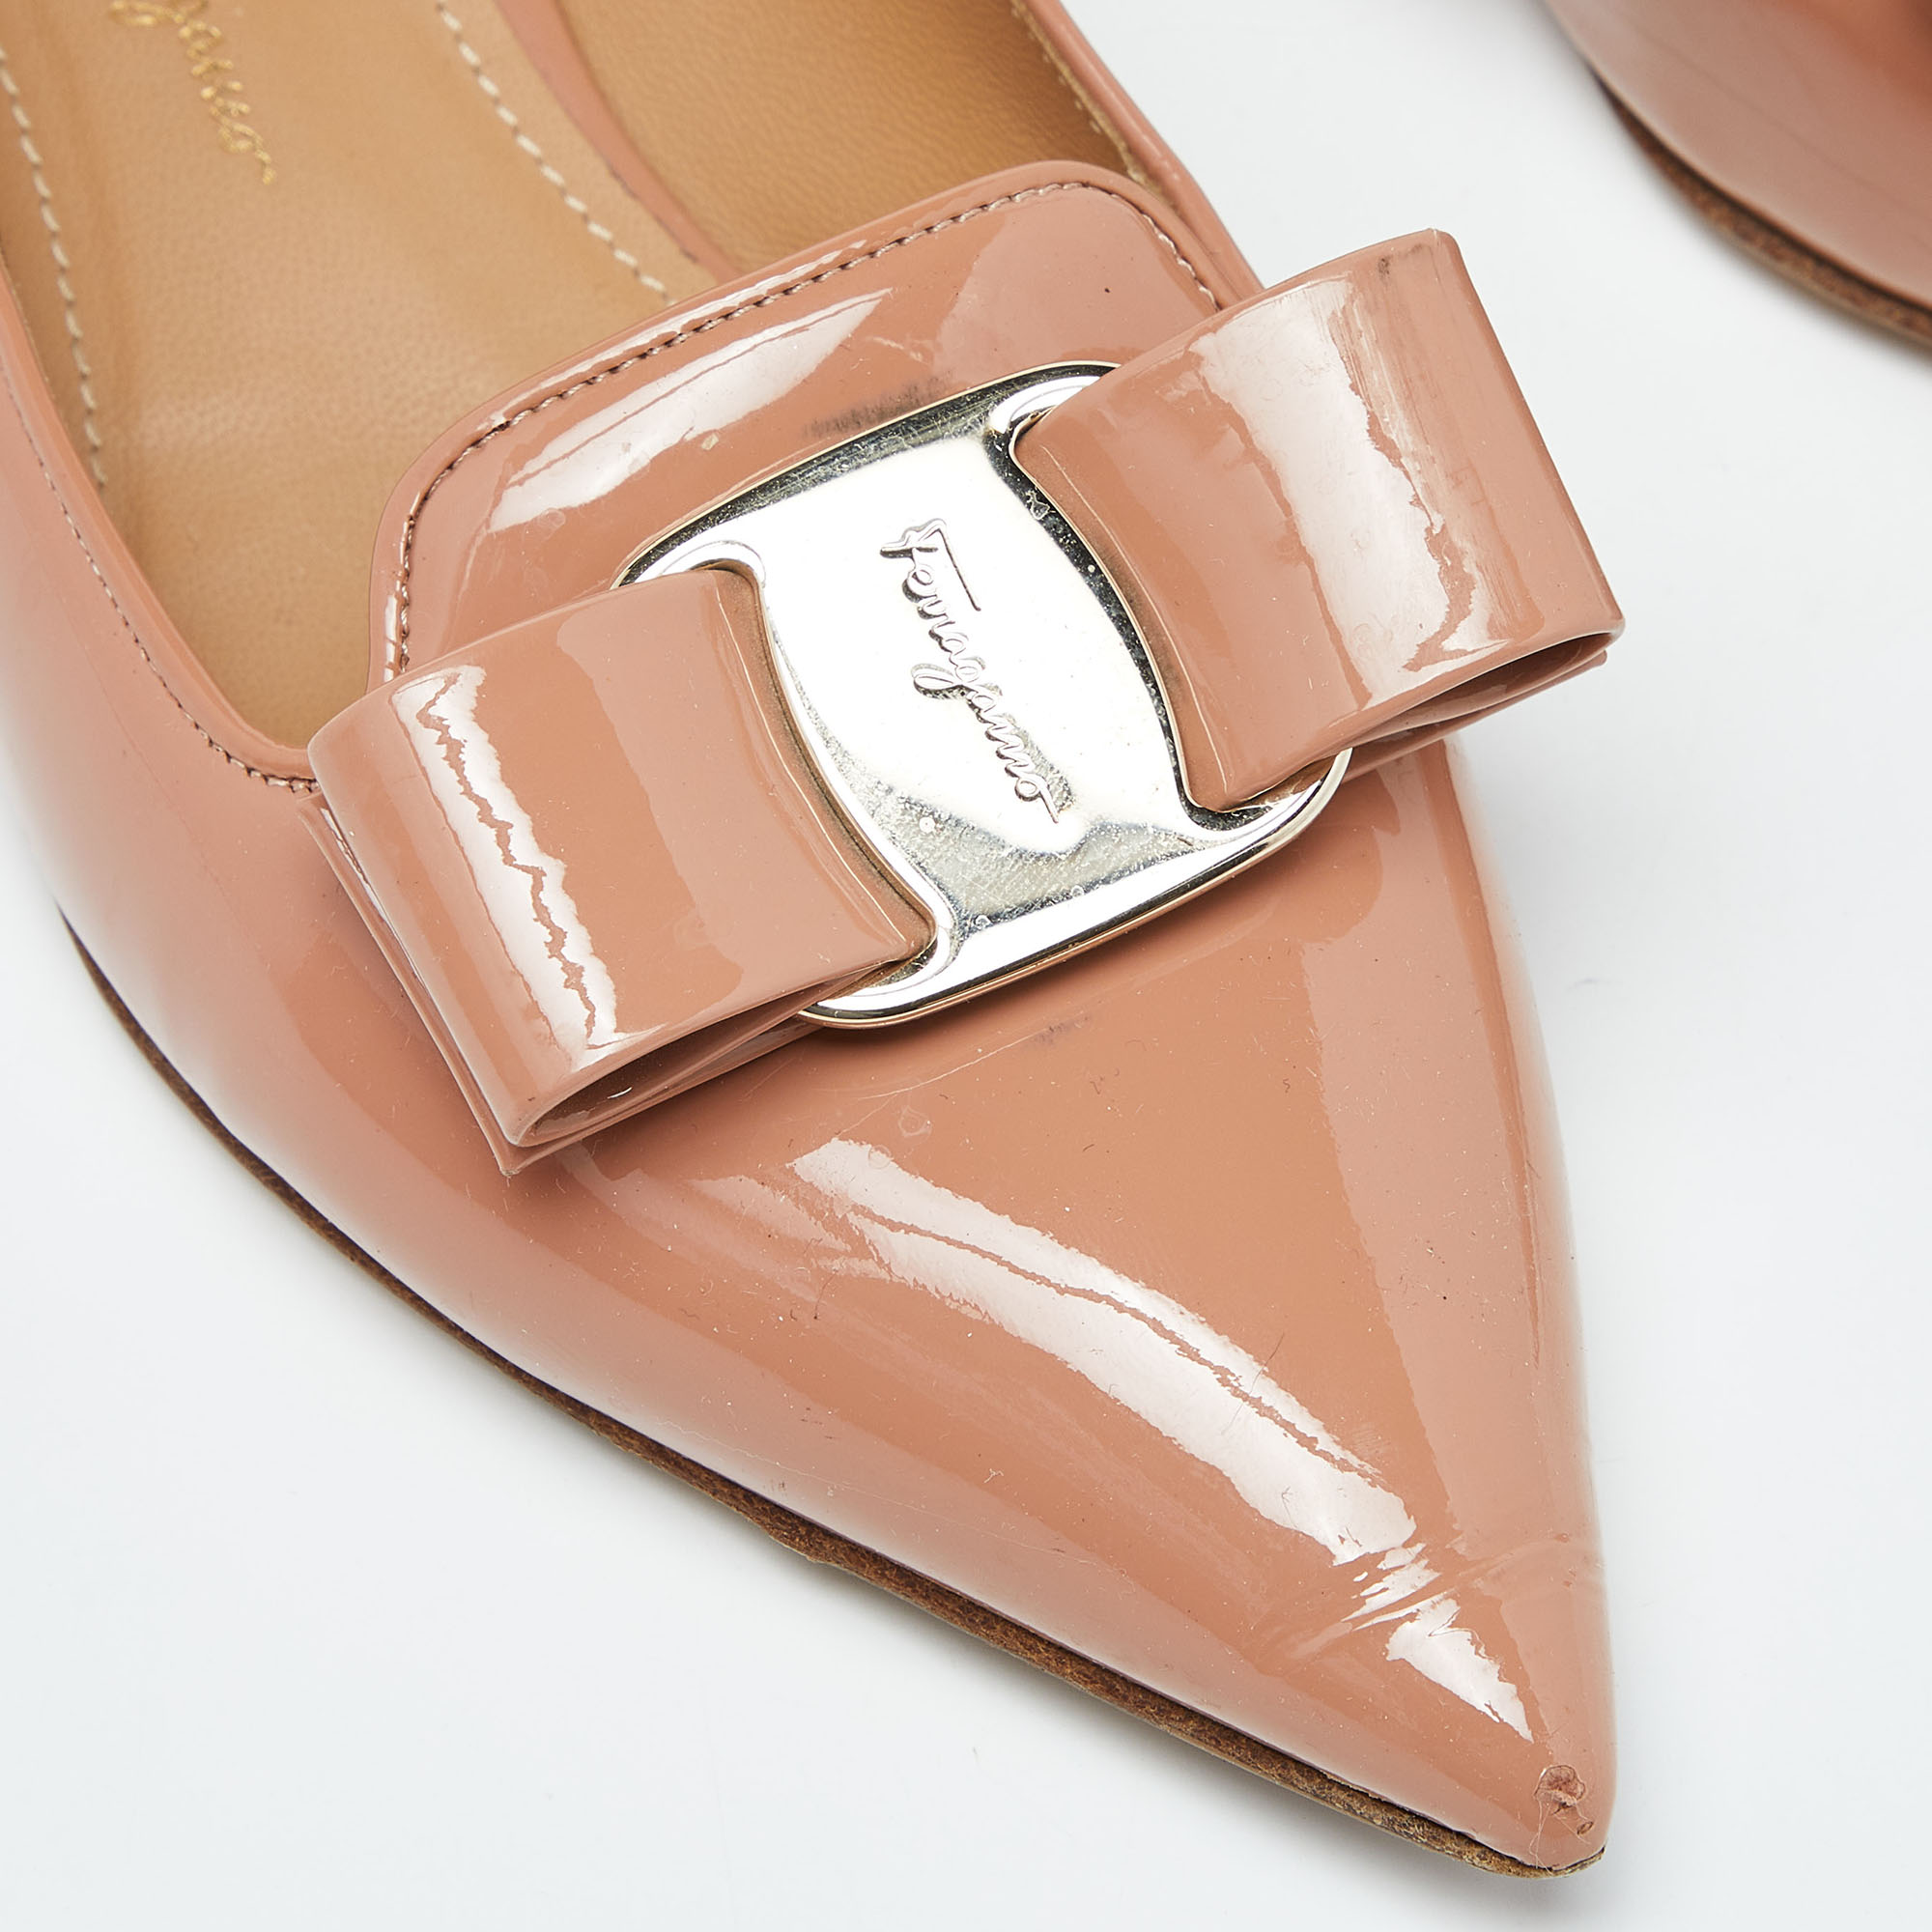 Salvatore Ferragamo Peach Patent Leather Zeri Pointed Toe Ballet Flats Size 37.5